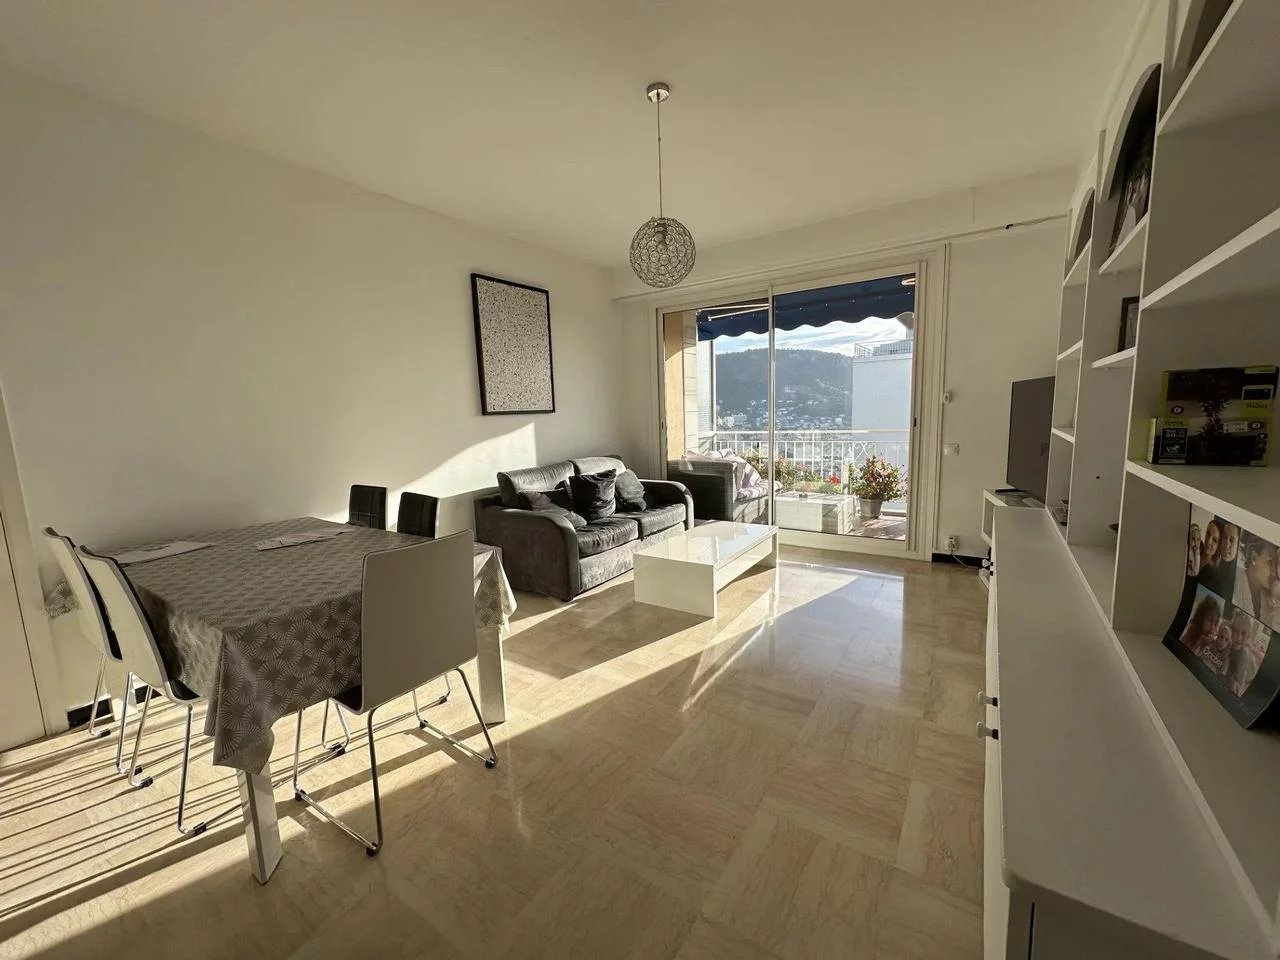 Appartement  3 Locali 75.08m2  In vendita   499 000 €